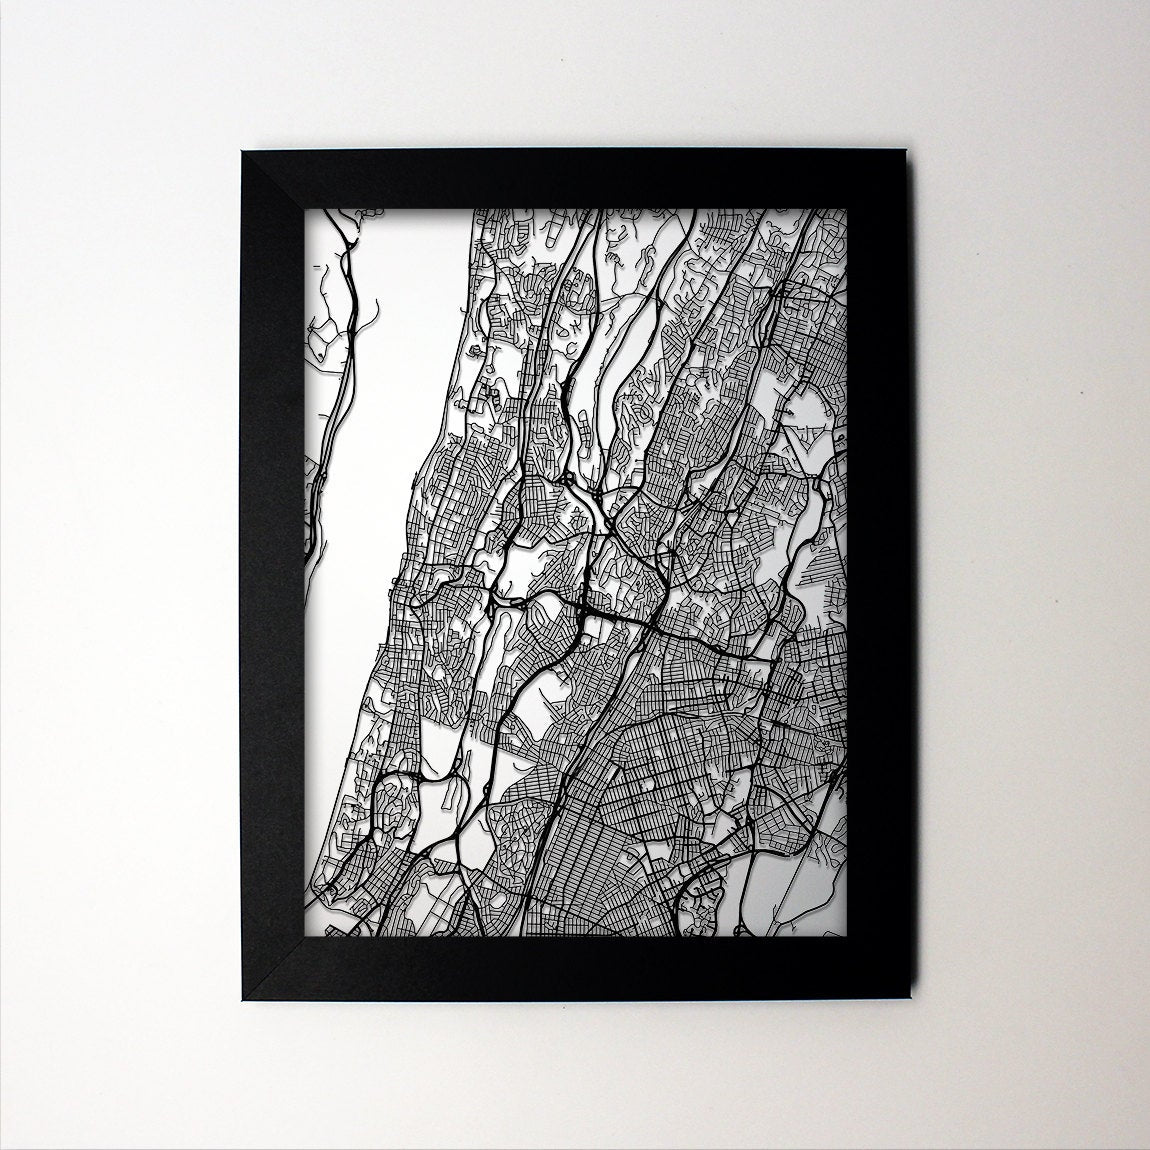 Yonkers New York framed laser cut map - CarbonLight